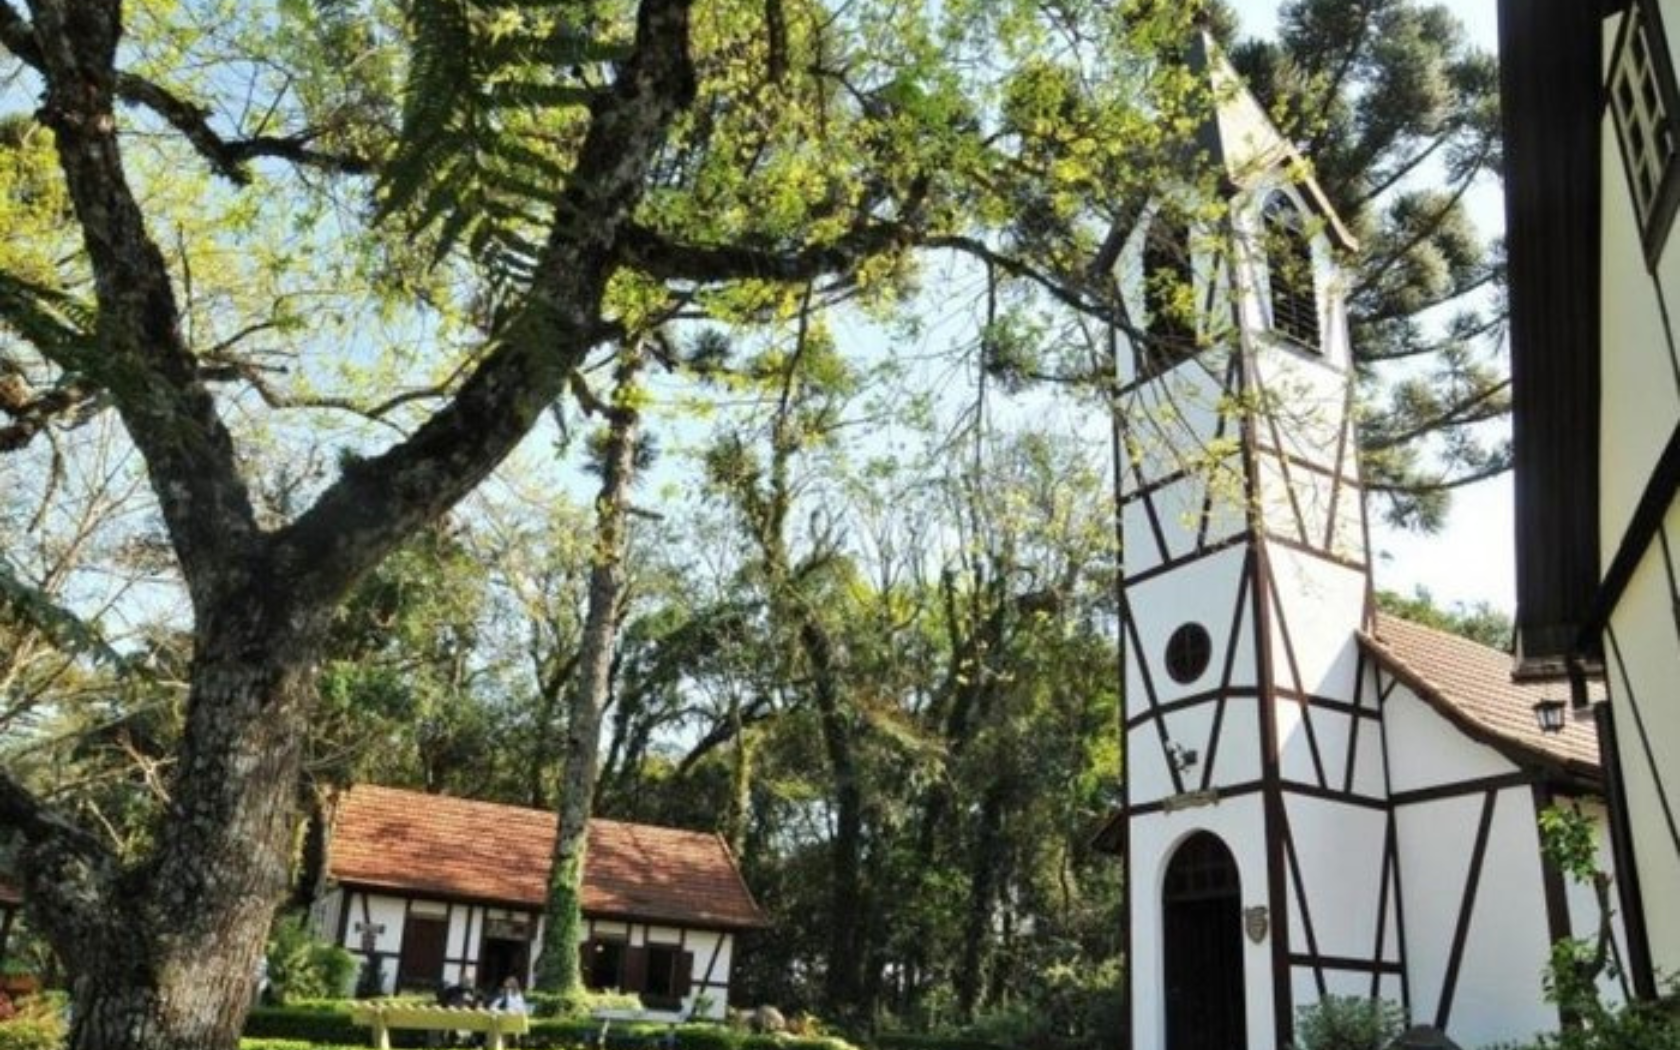 Municípios da serra gaúcha e e de Estados brasileiros encantam pelas belezas naturais e culturais